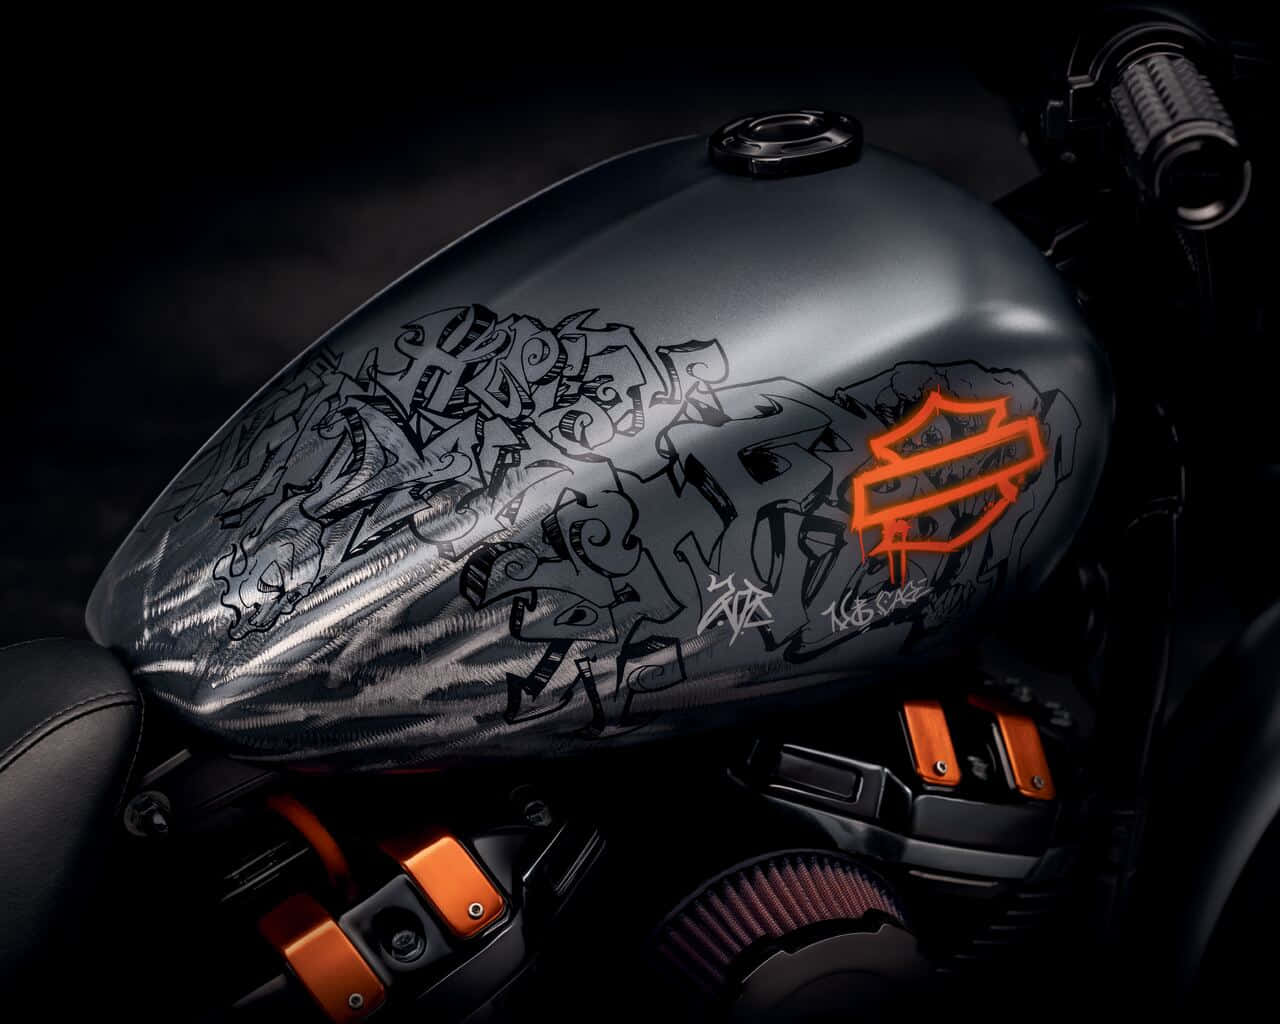 Harley Davidson Logo With Tribal Design Background